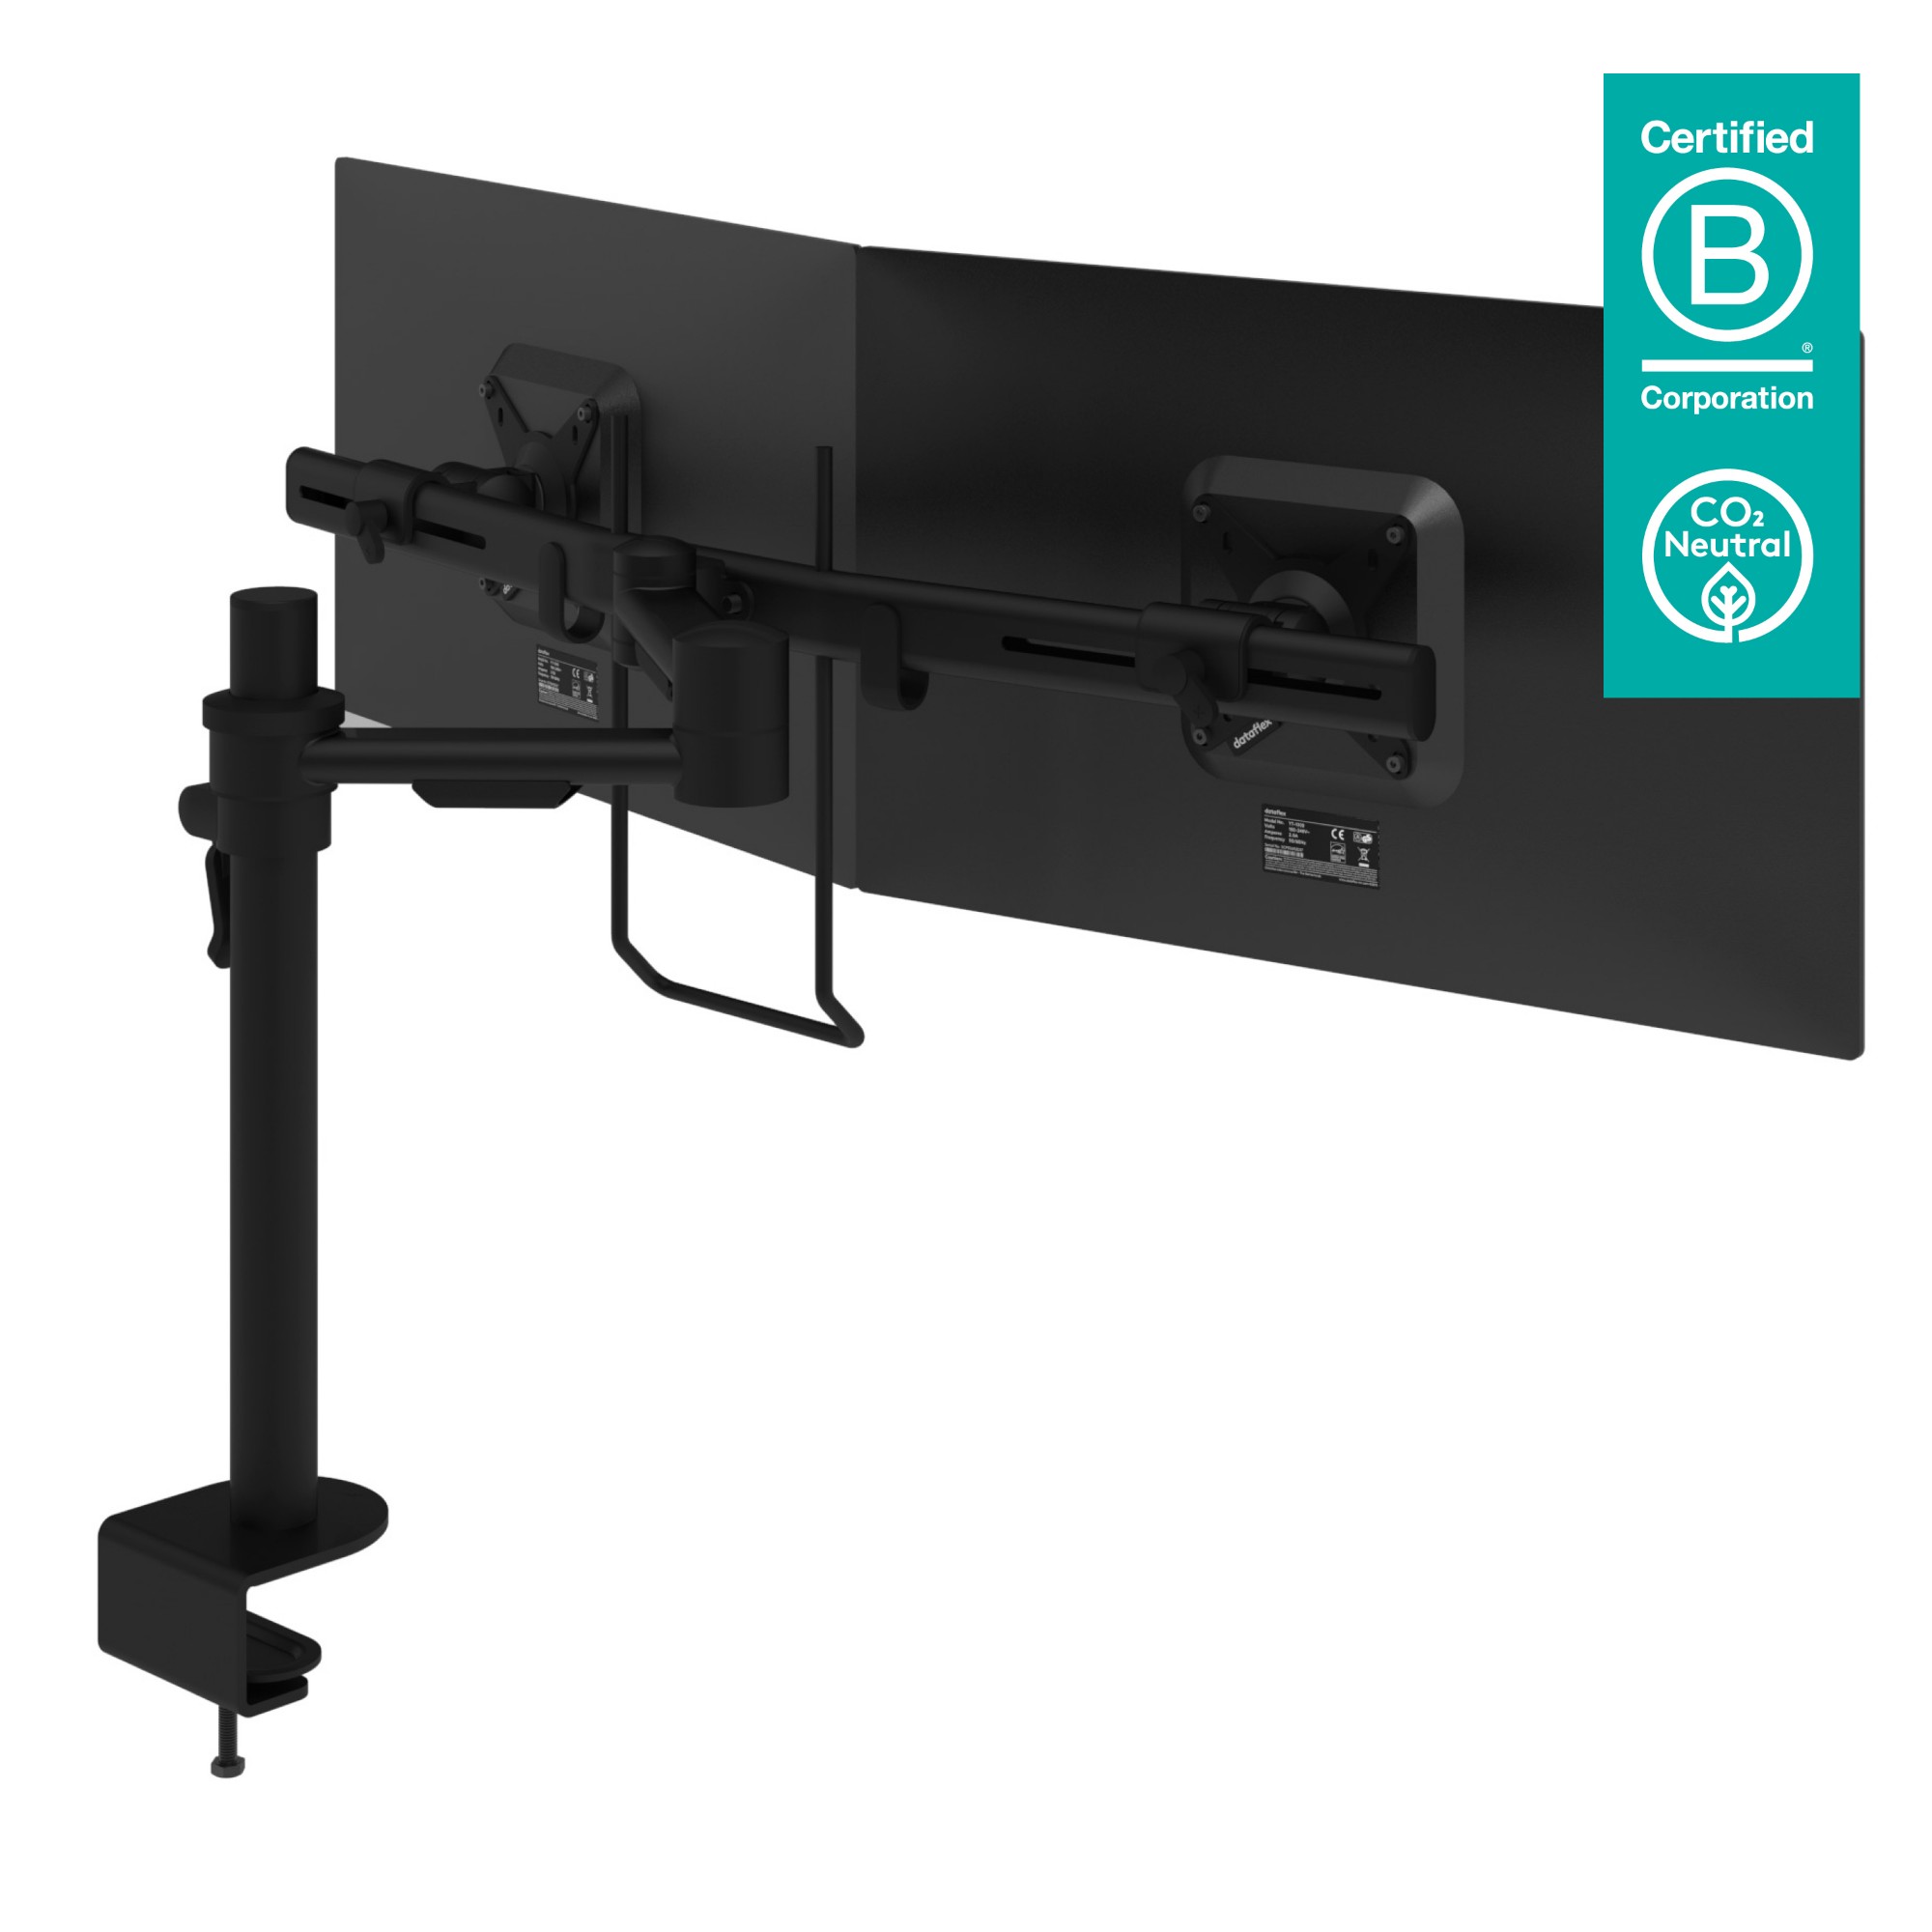 52.603 Dataflex Viewmate dual monitor arm - black - desk clamp and bolt through mounts - depth adjustment